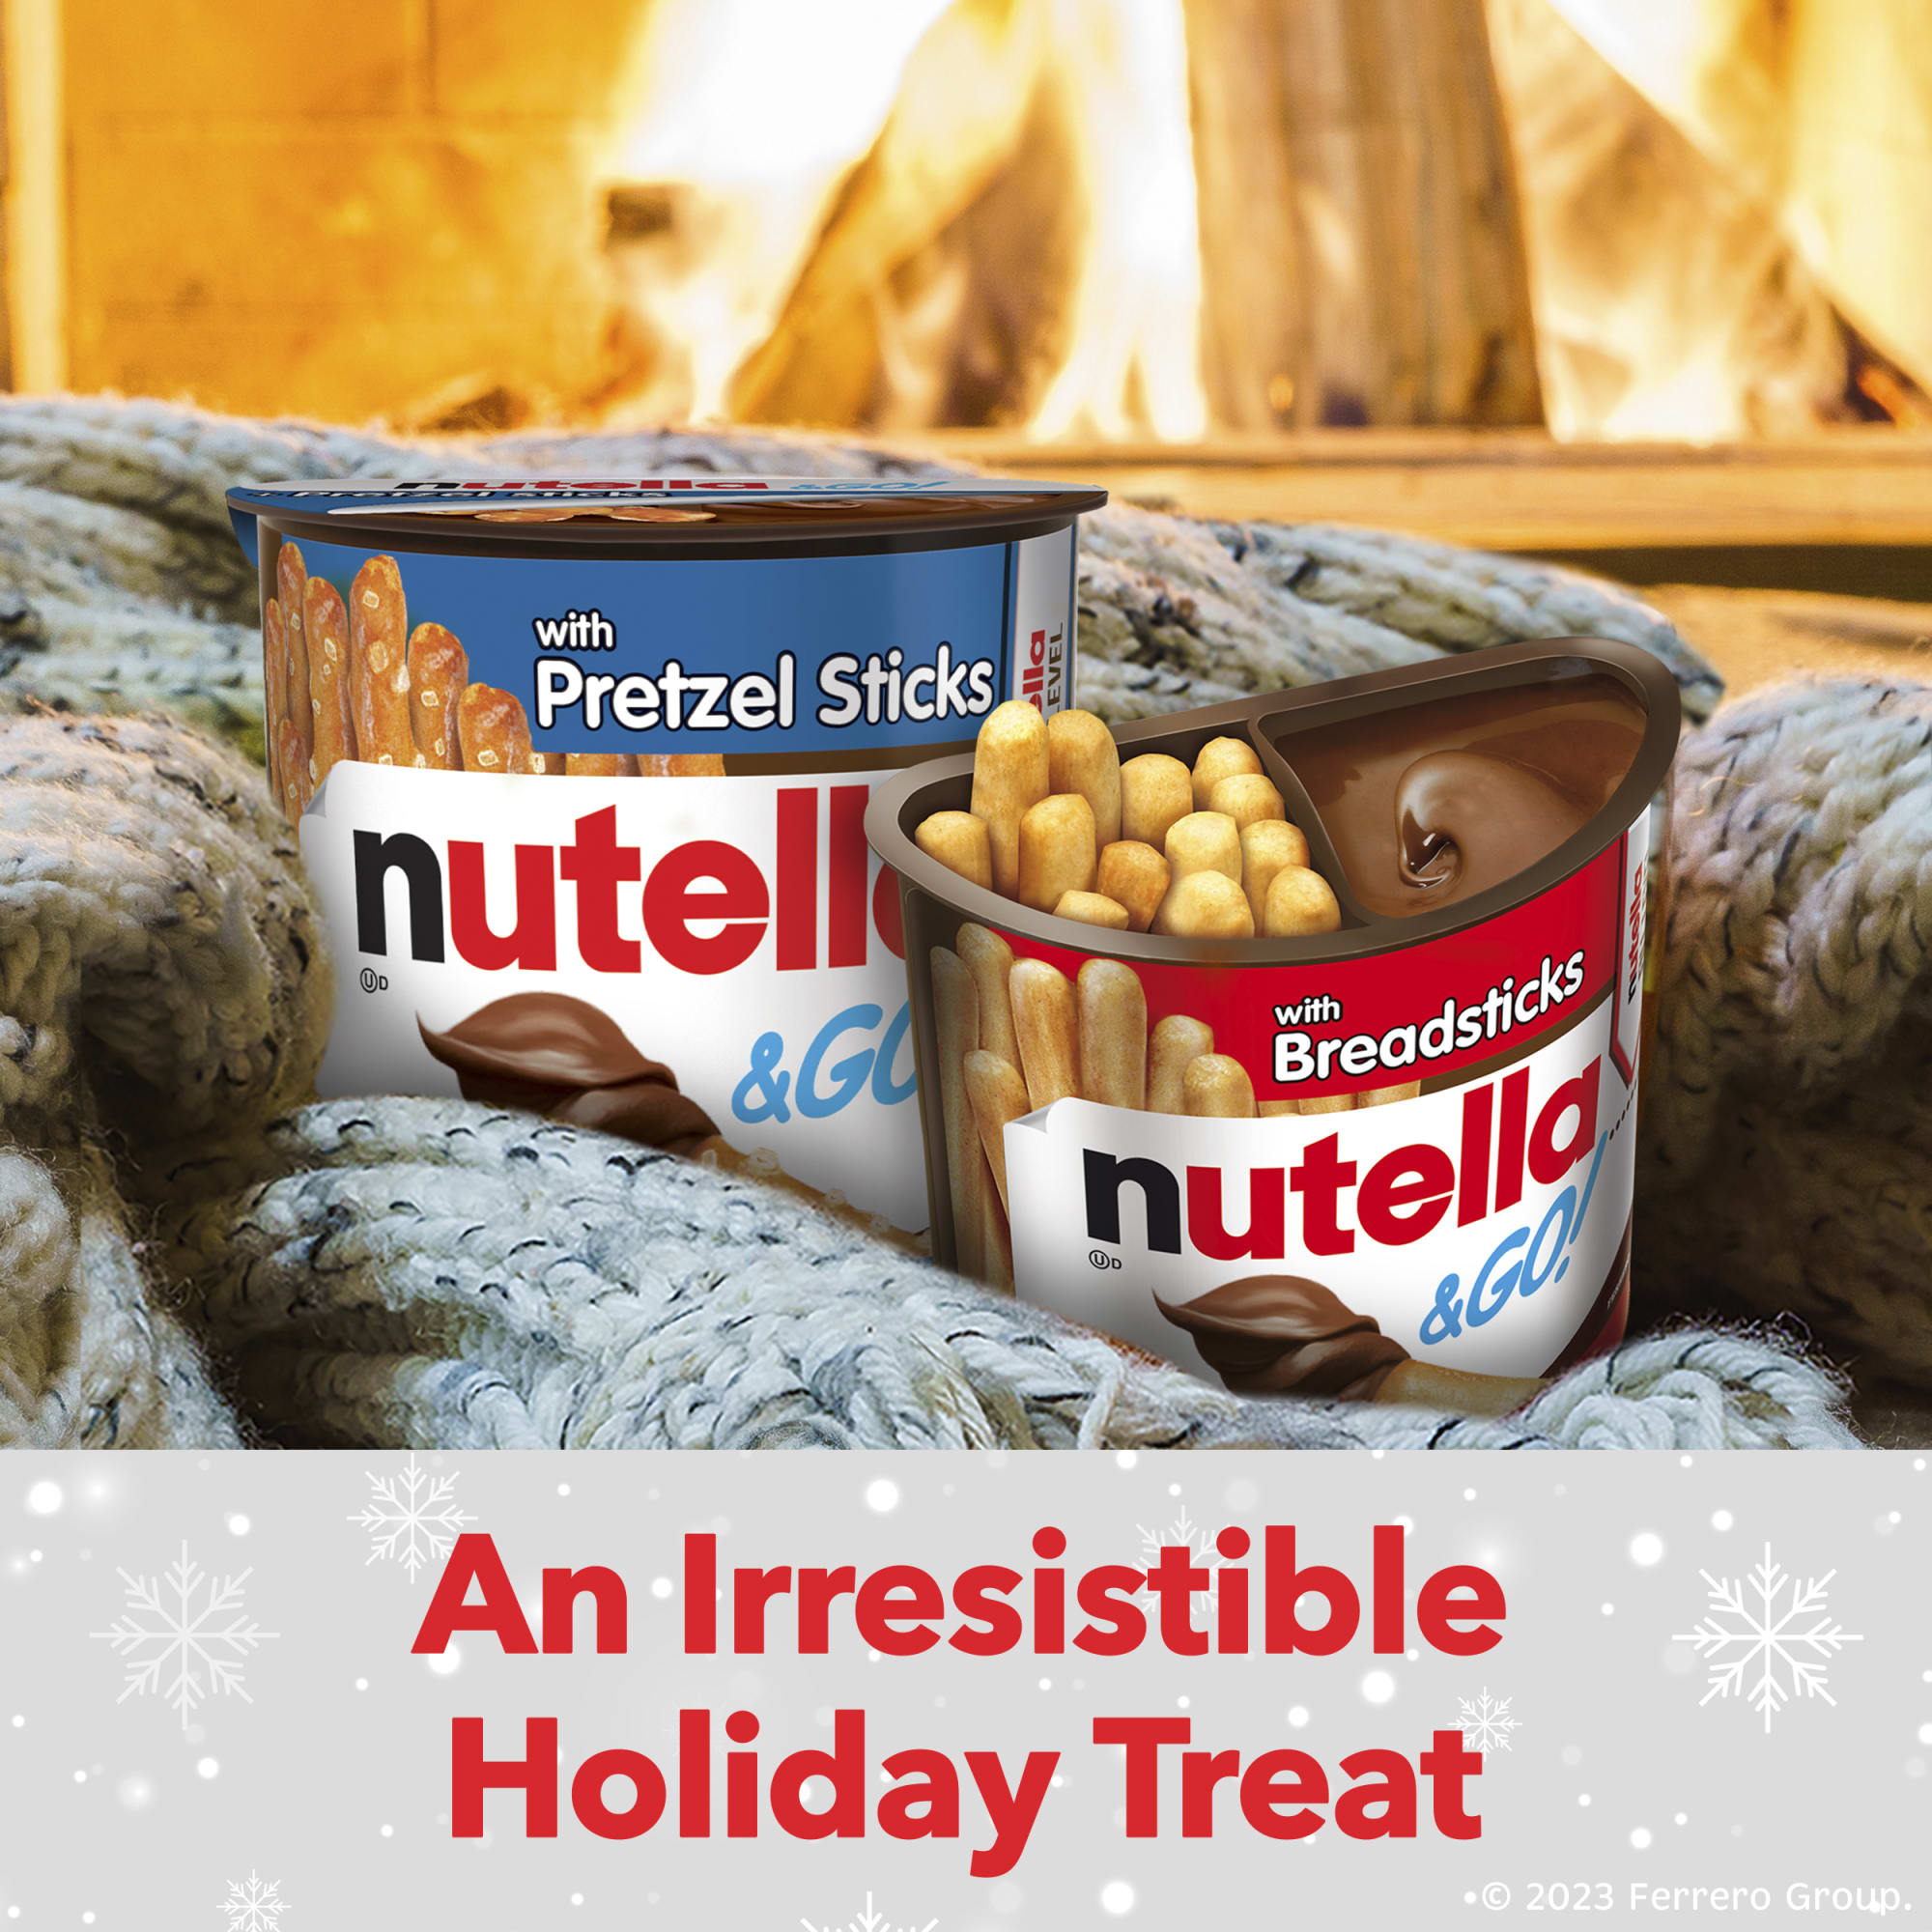 Nutella & GO! Hazelnut and Cocoa Spread With Pretzel Sticks 1.9 oz